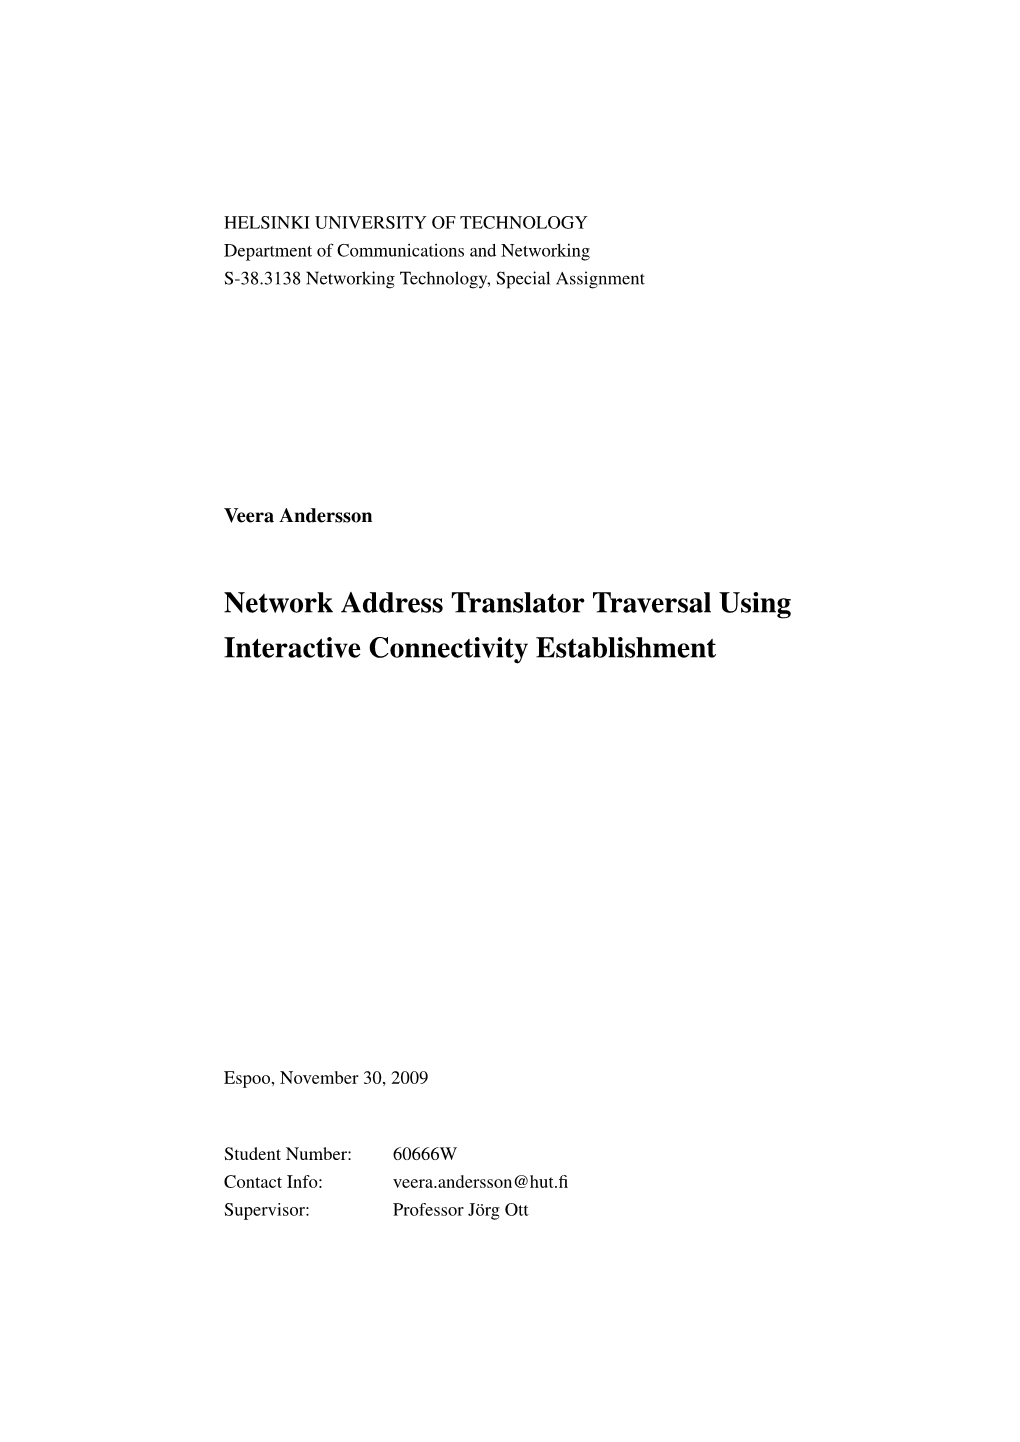 Network Address Translator Traversal Using Interactive Connectivity Establishment